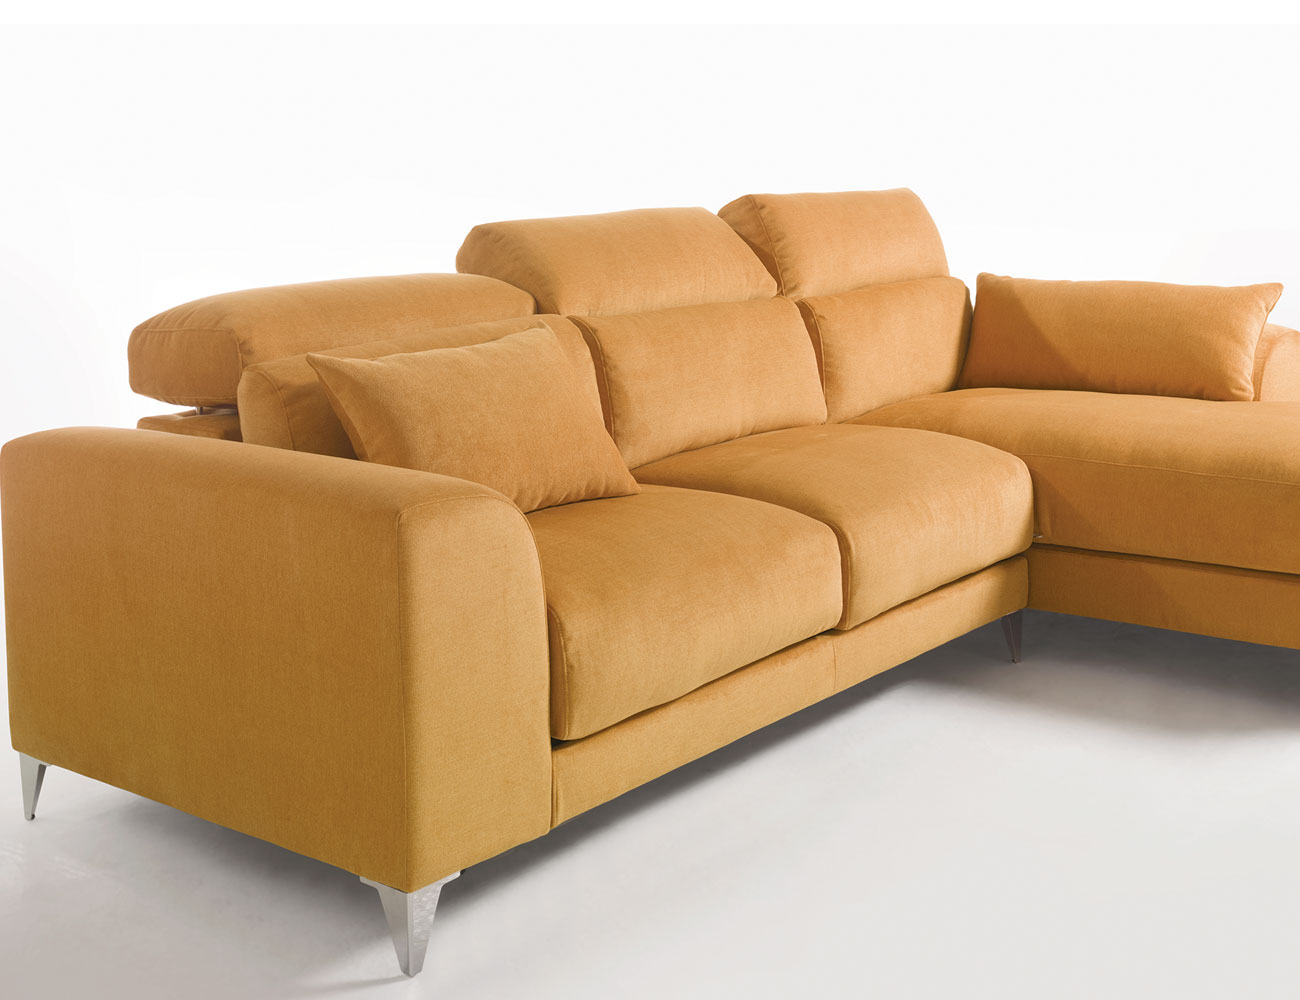 Sofa chaiselongue gran lujo decorativo patas altas amarillo 2